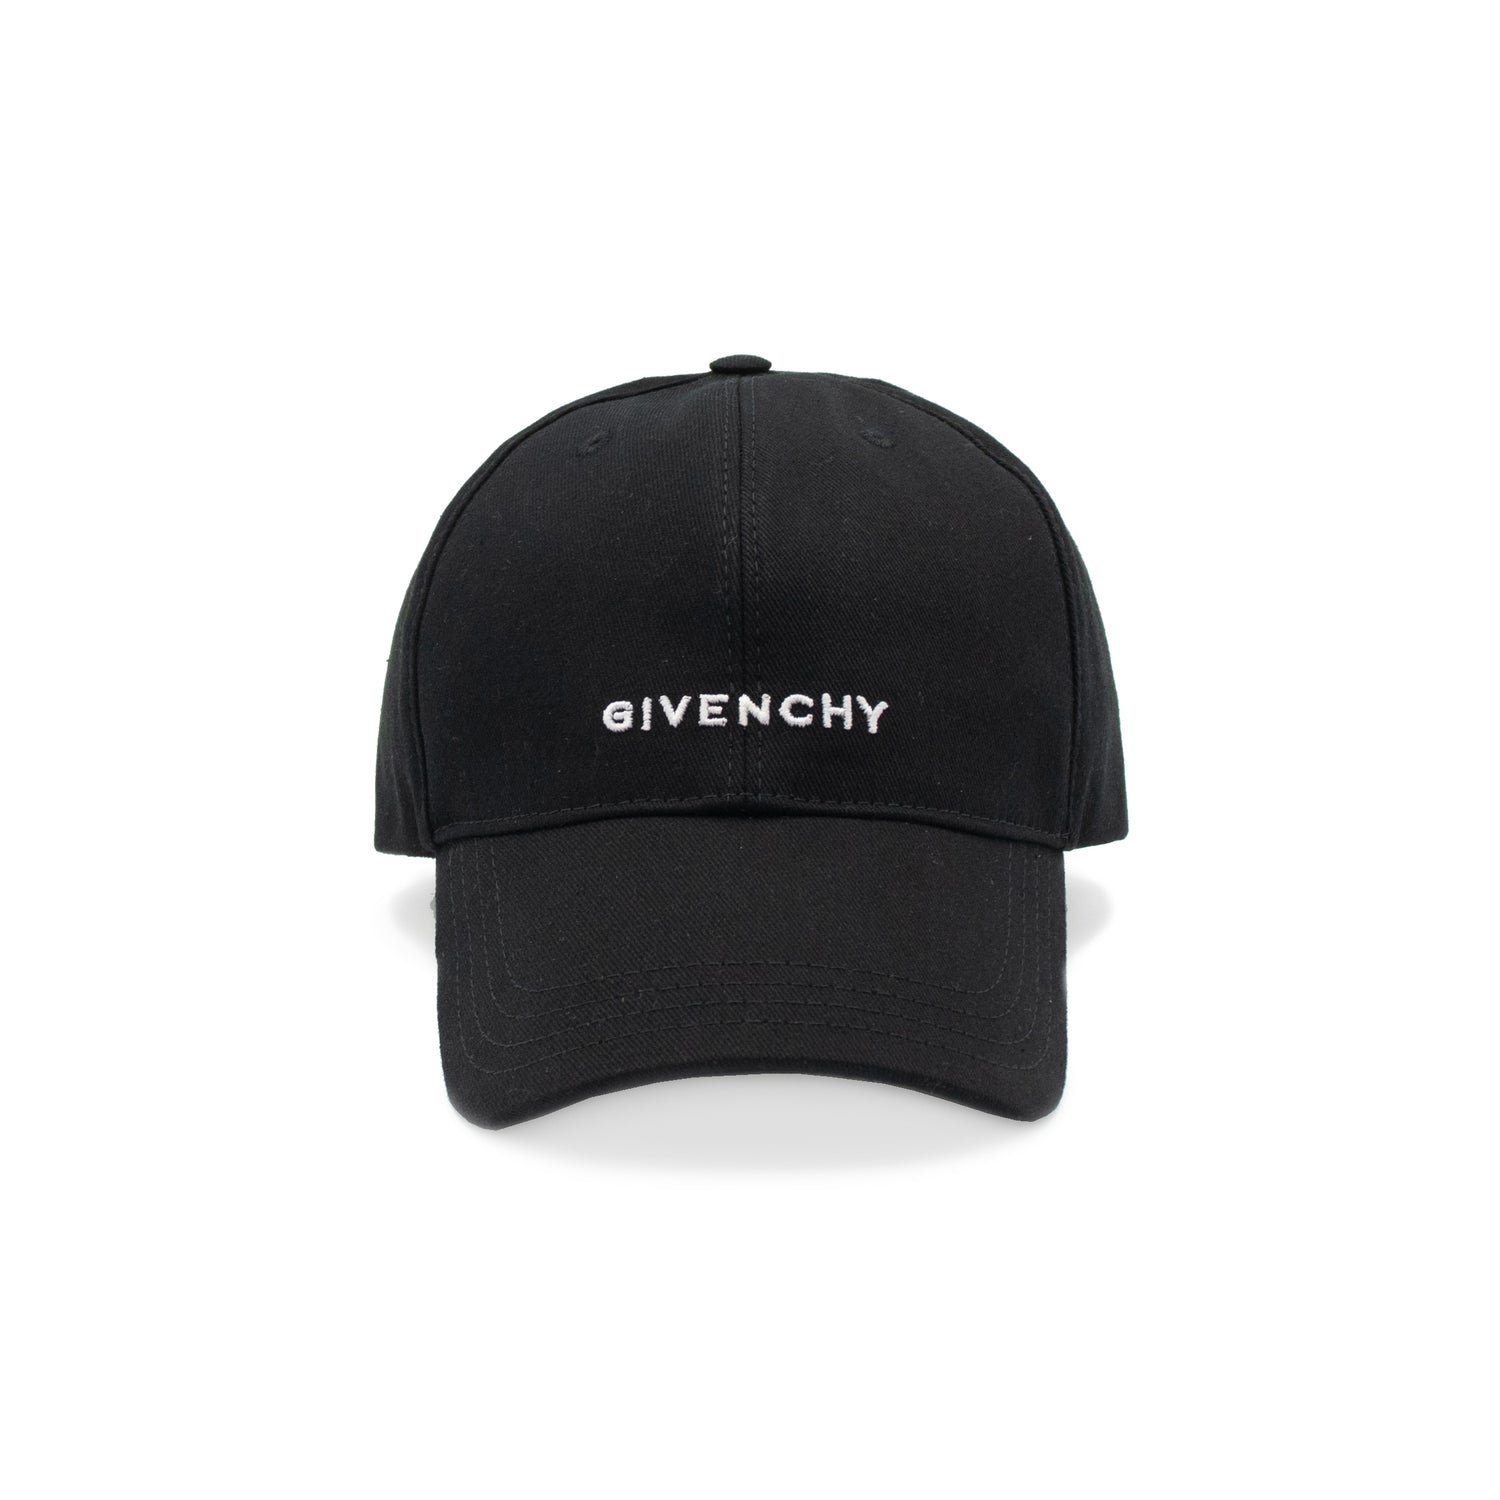 Givenchy Sale - Men Accessories